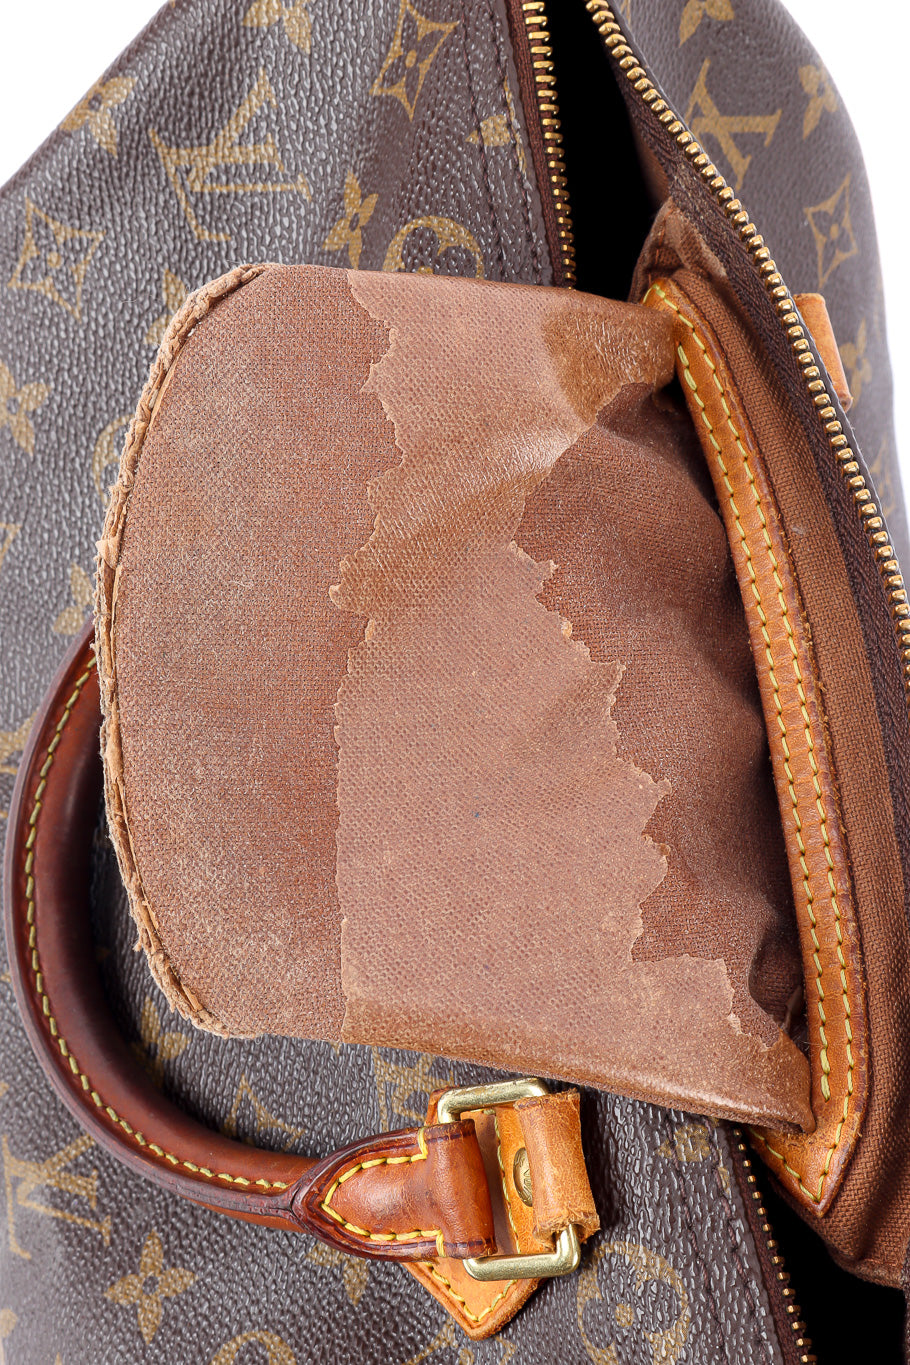 Vintage Louis Vuitton Classic Monogram Speedy 30 Bag II pocket lining damage closeup @Recessla